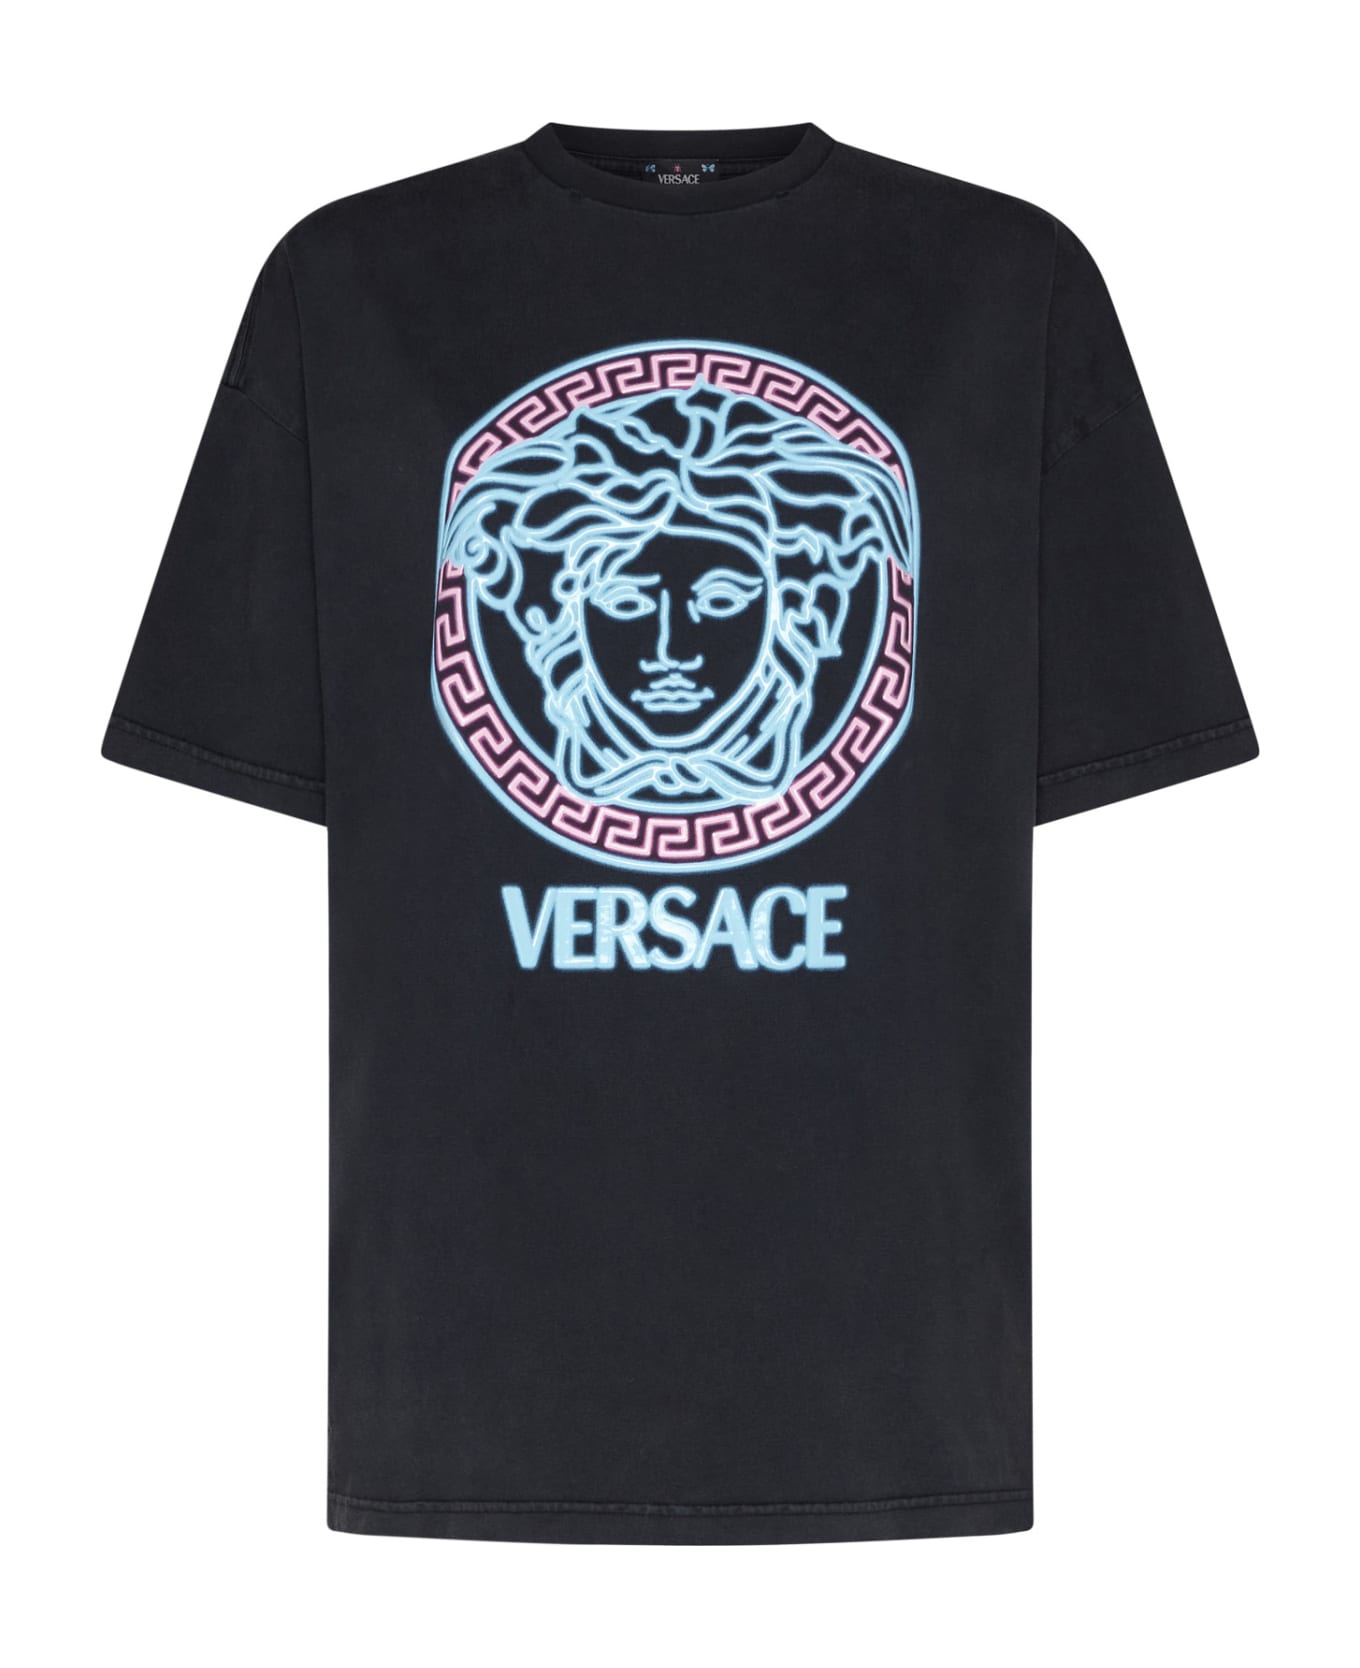 Versace T-Shirt - Blacblack+neon azur+neon pink